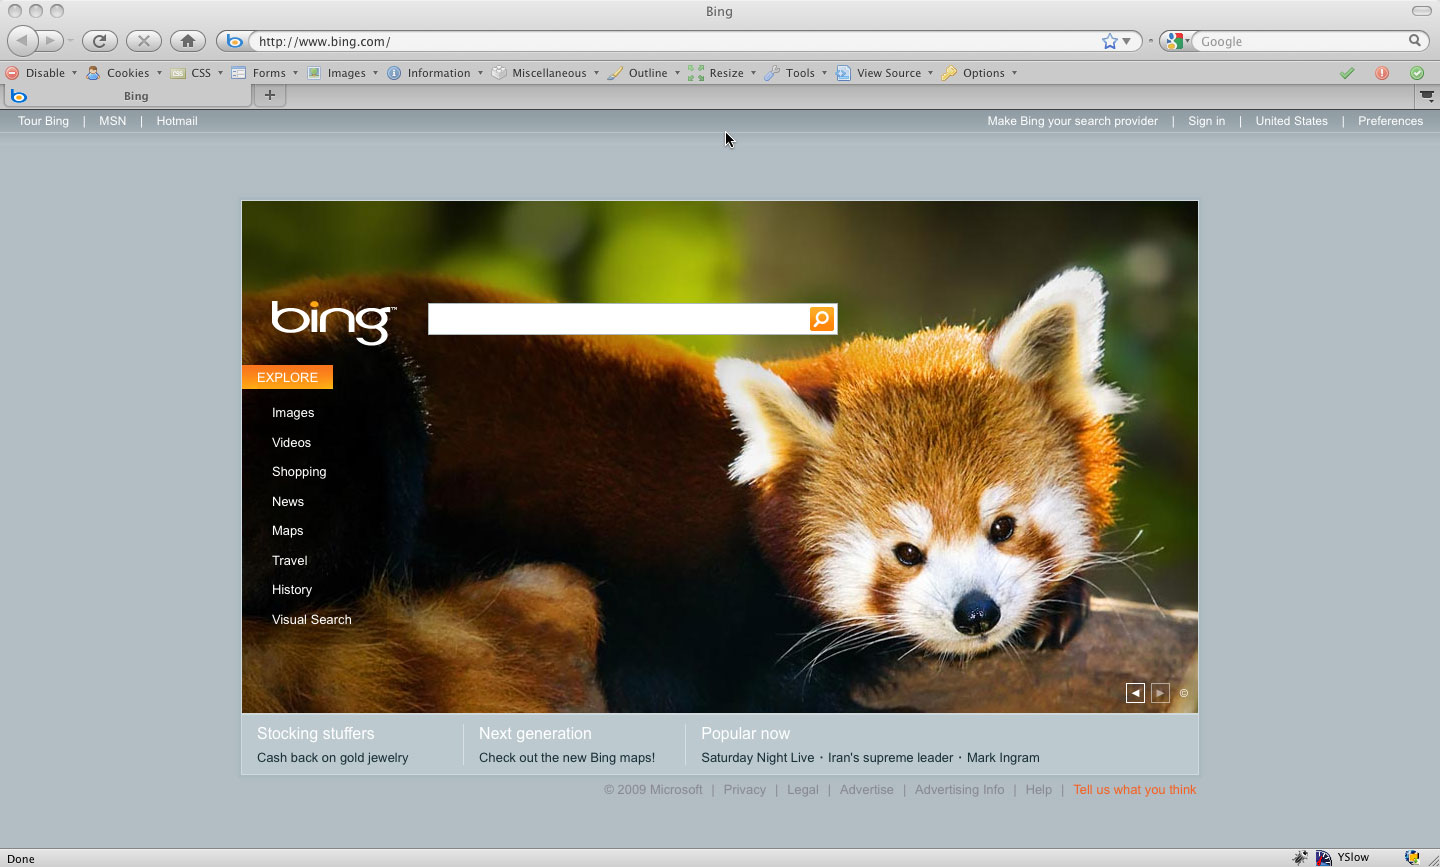 Firefox On Bing.com